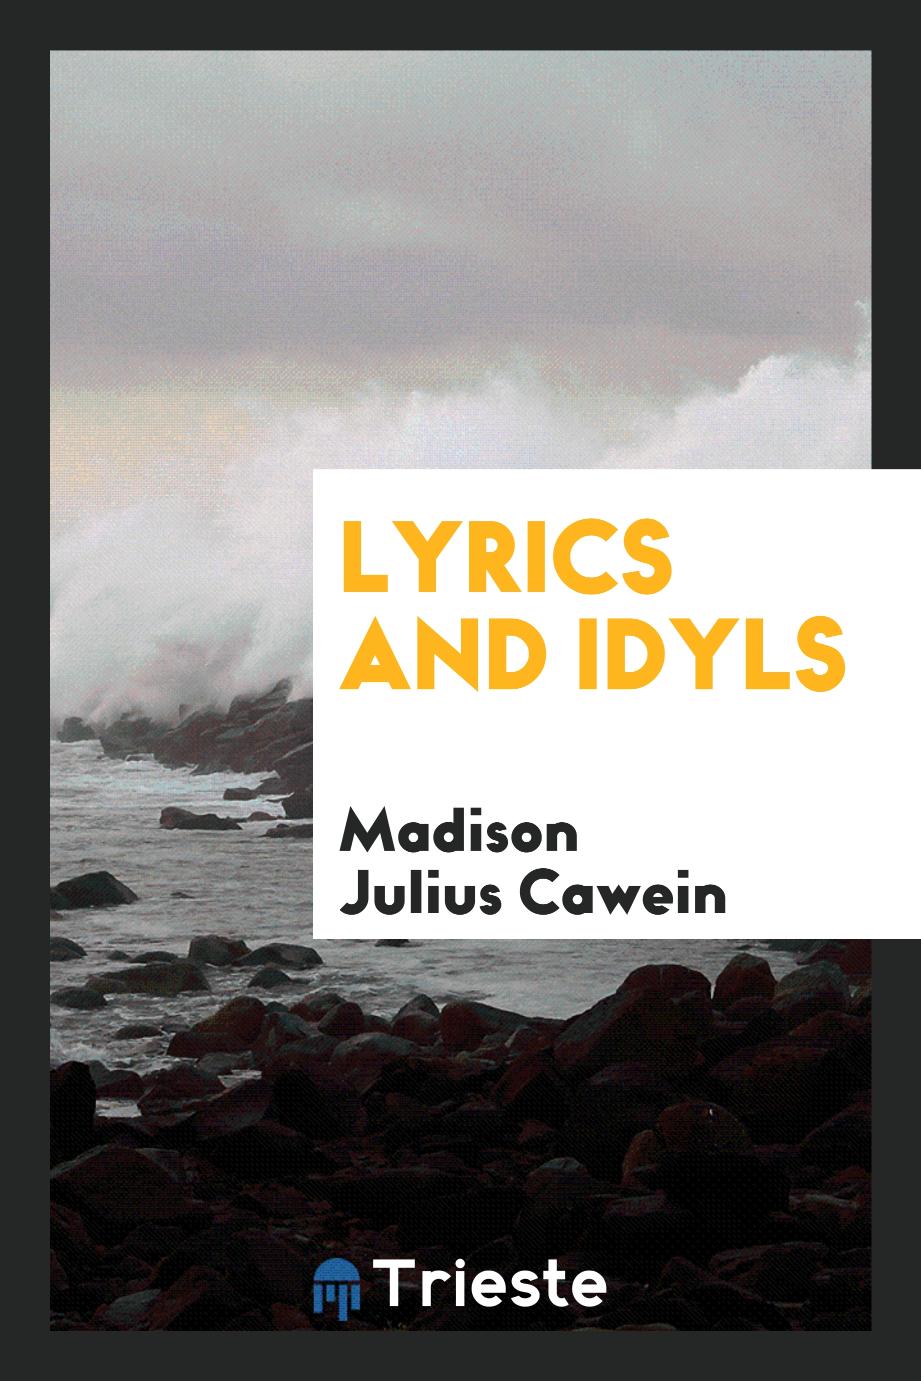 Lyrics and idyls